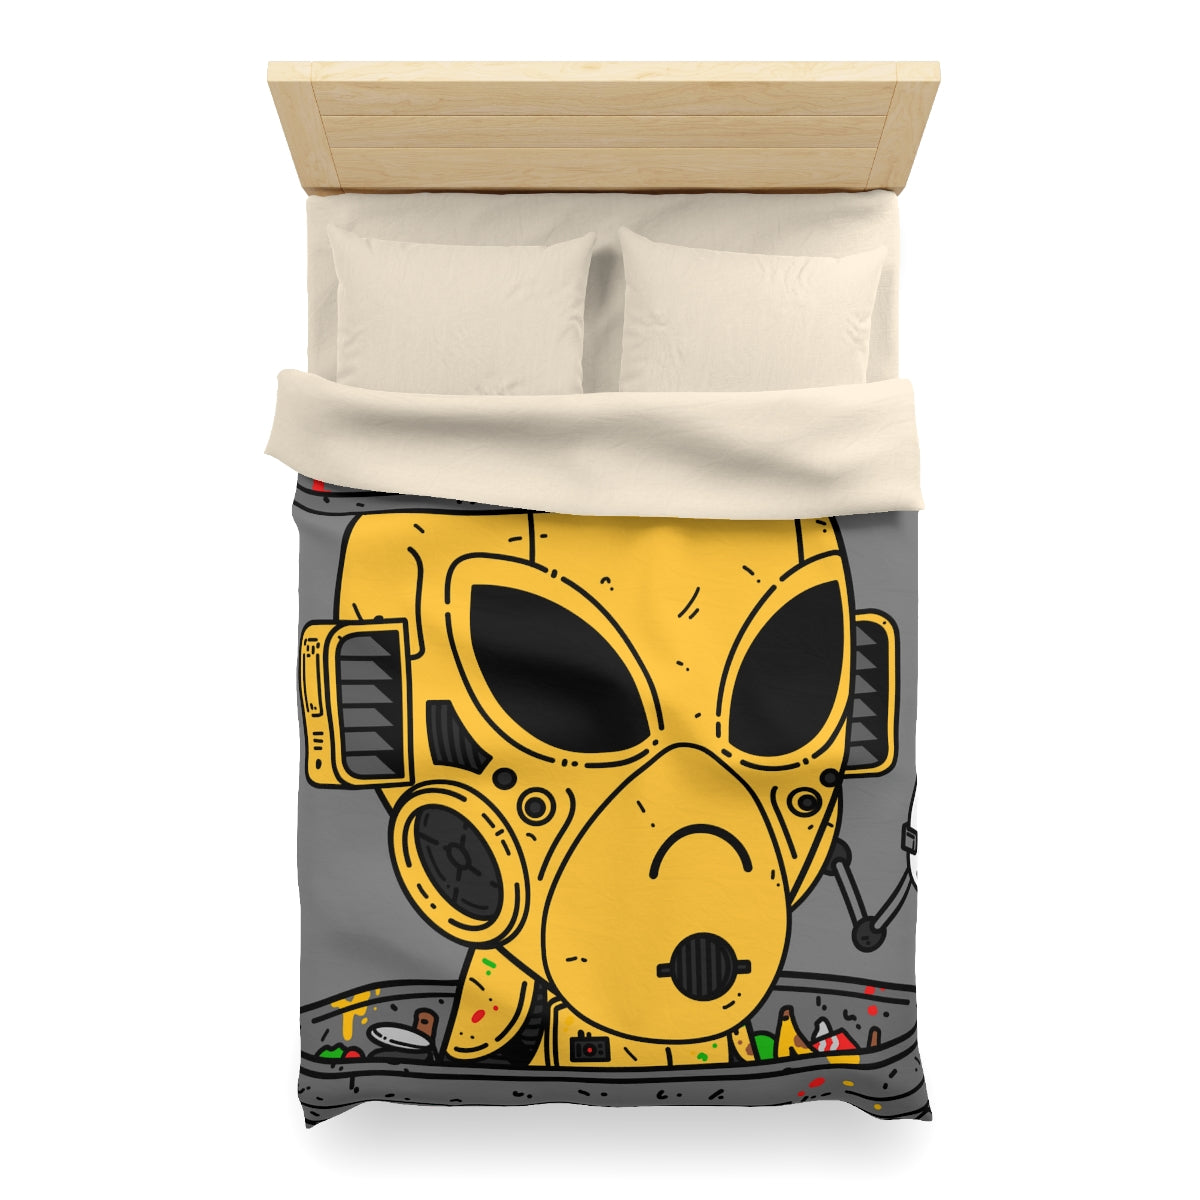 Trashcan Art Egg Armored Yellow Future Alien Cyborg Machine Visitor Microfiber Duvet Cover